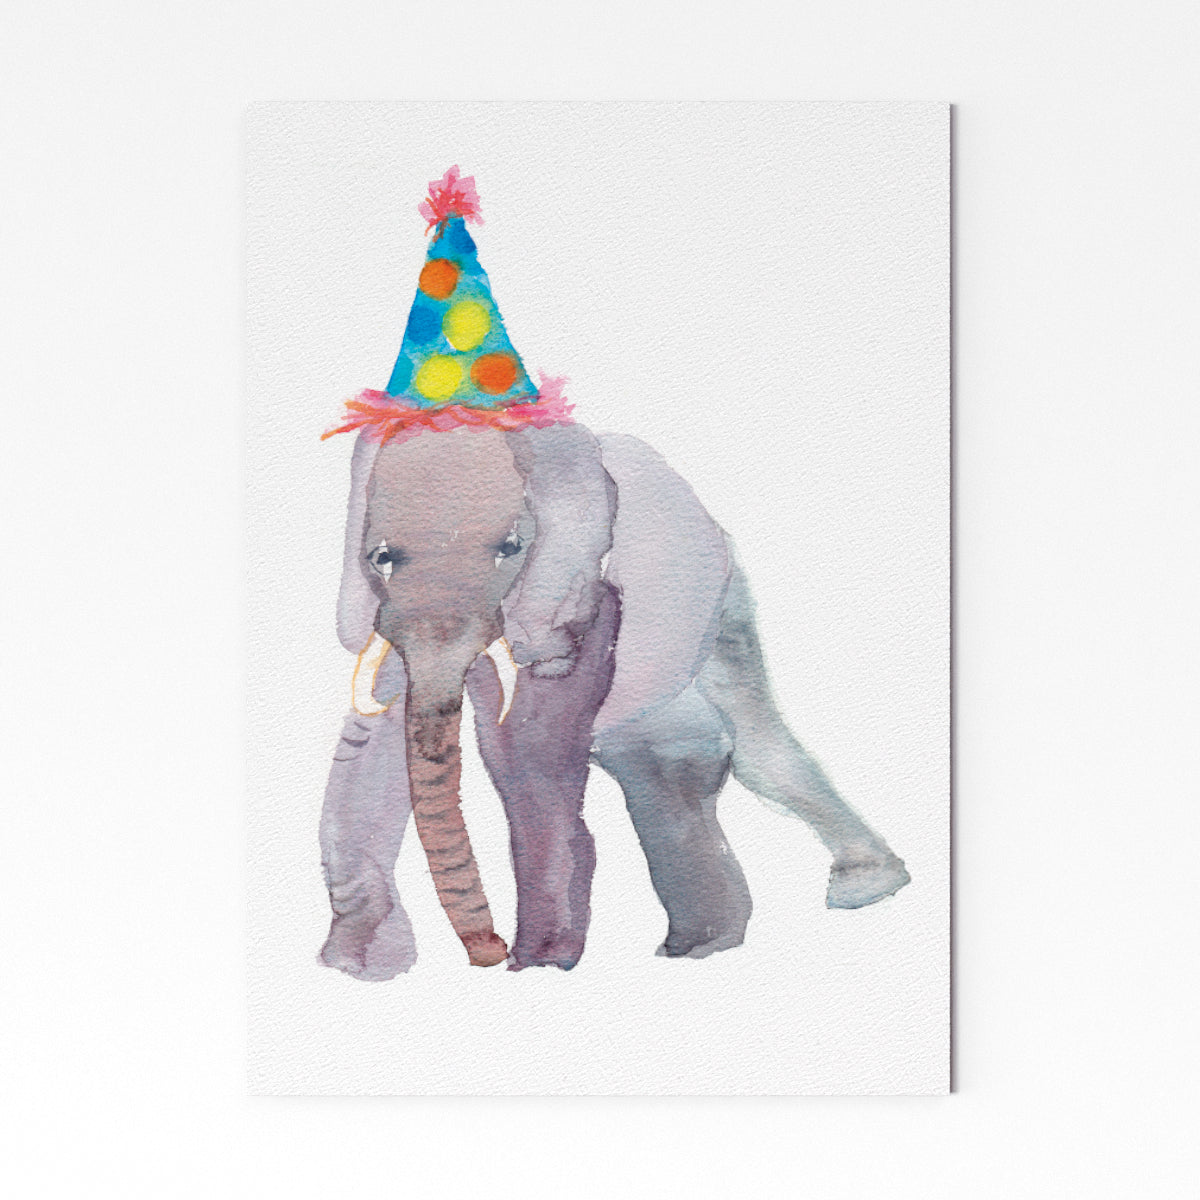 Party Elephant